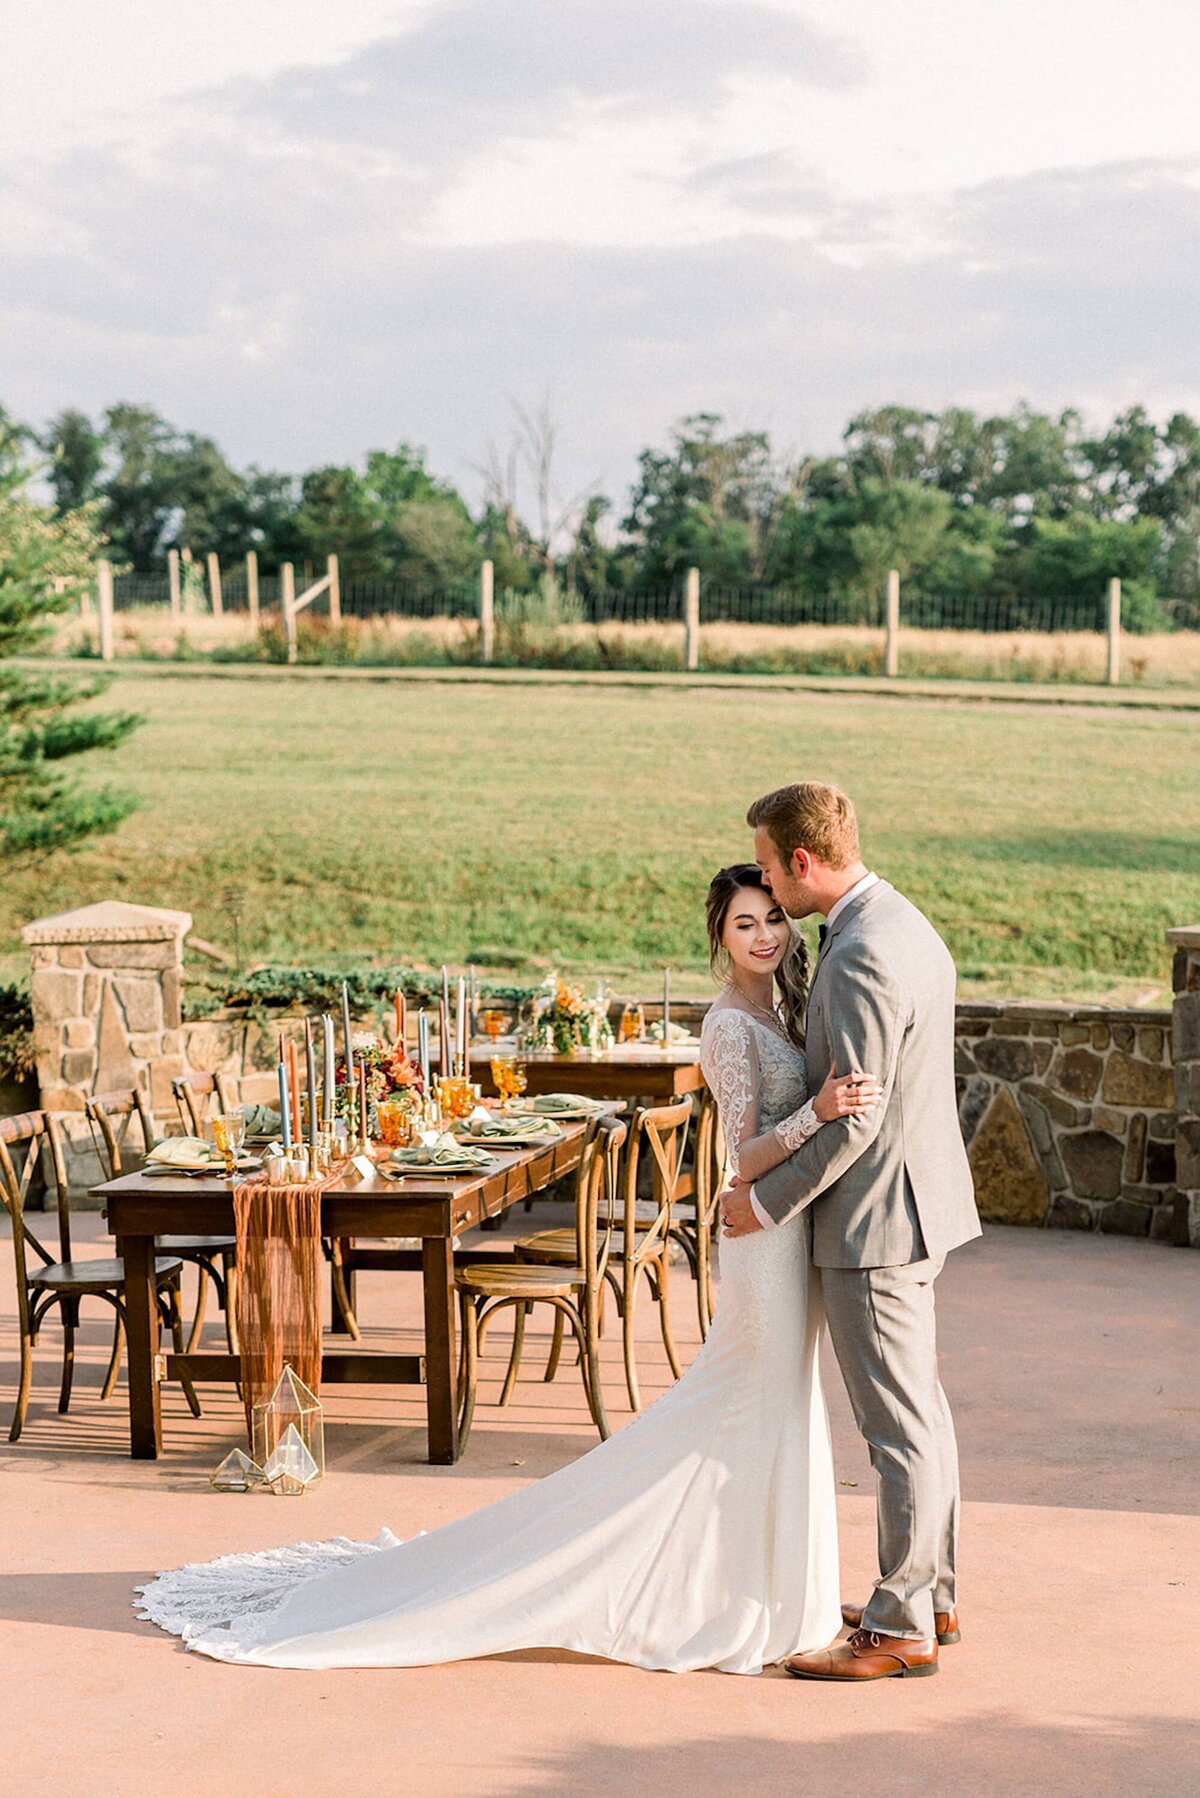 Bride and groom with wedding table outdoor wedding